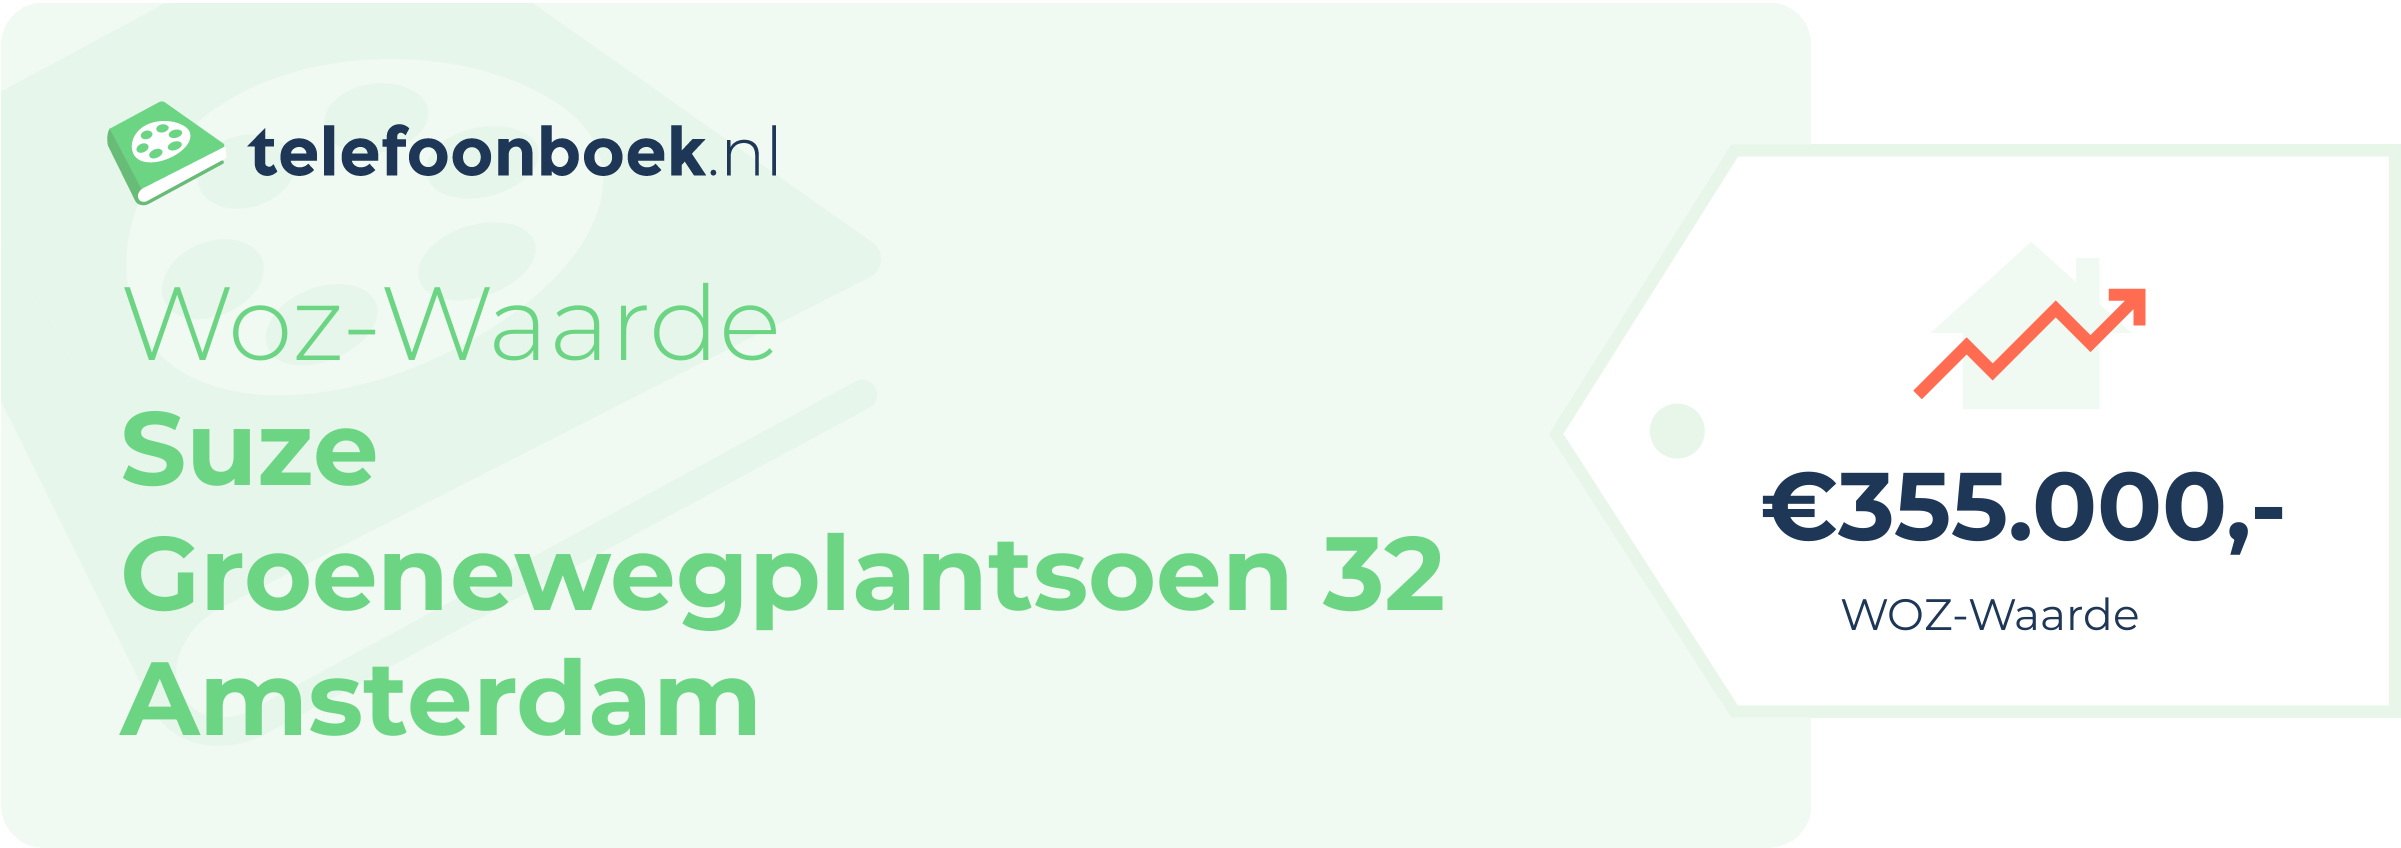 WOZ-waarde Suze Groenewegplantsoen 32 Amsterdam